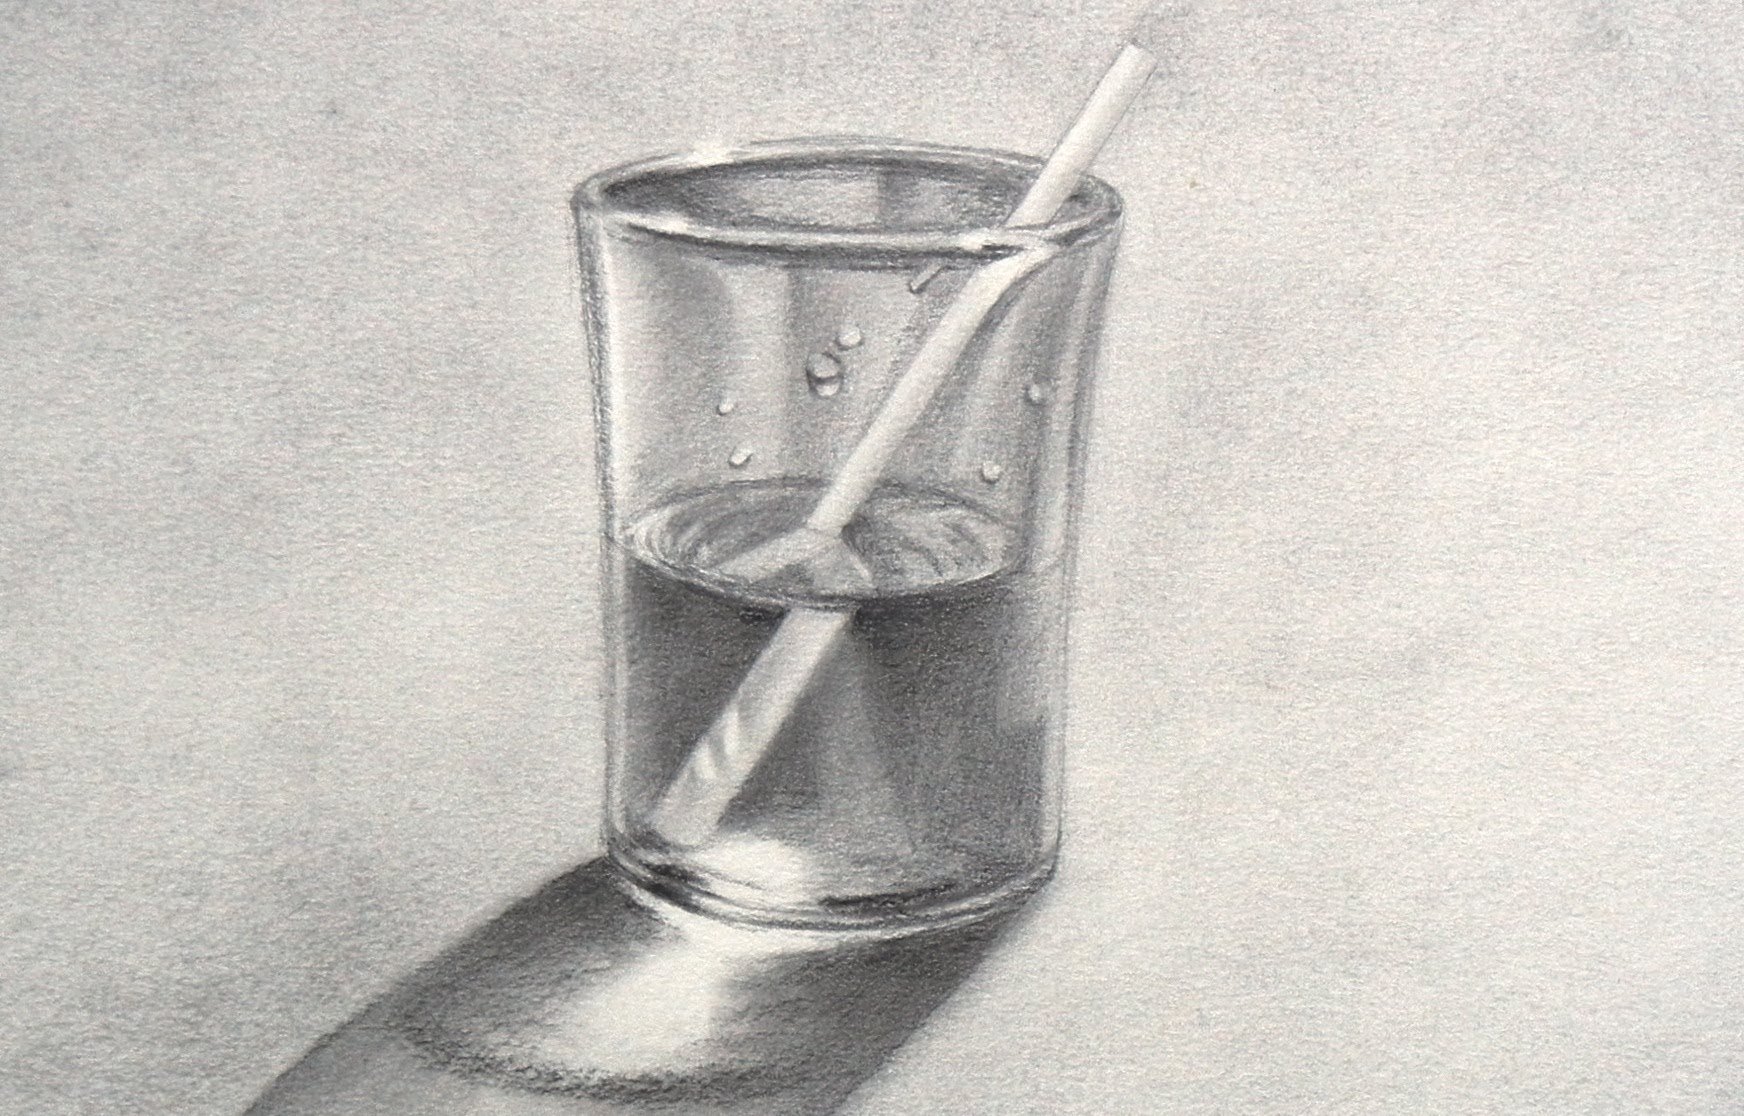 Стакан воды карандашом. Стеклянный стакан карандашом. Натюрморт со стеклом карандашом. Стеклянные предметы карандашом. Наброски карандашом предметы.